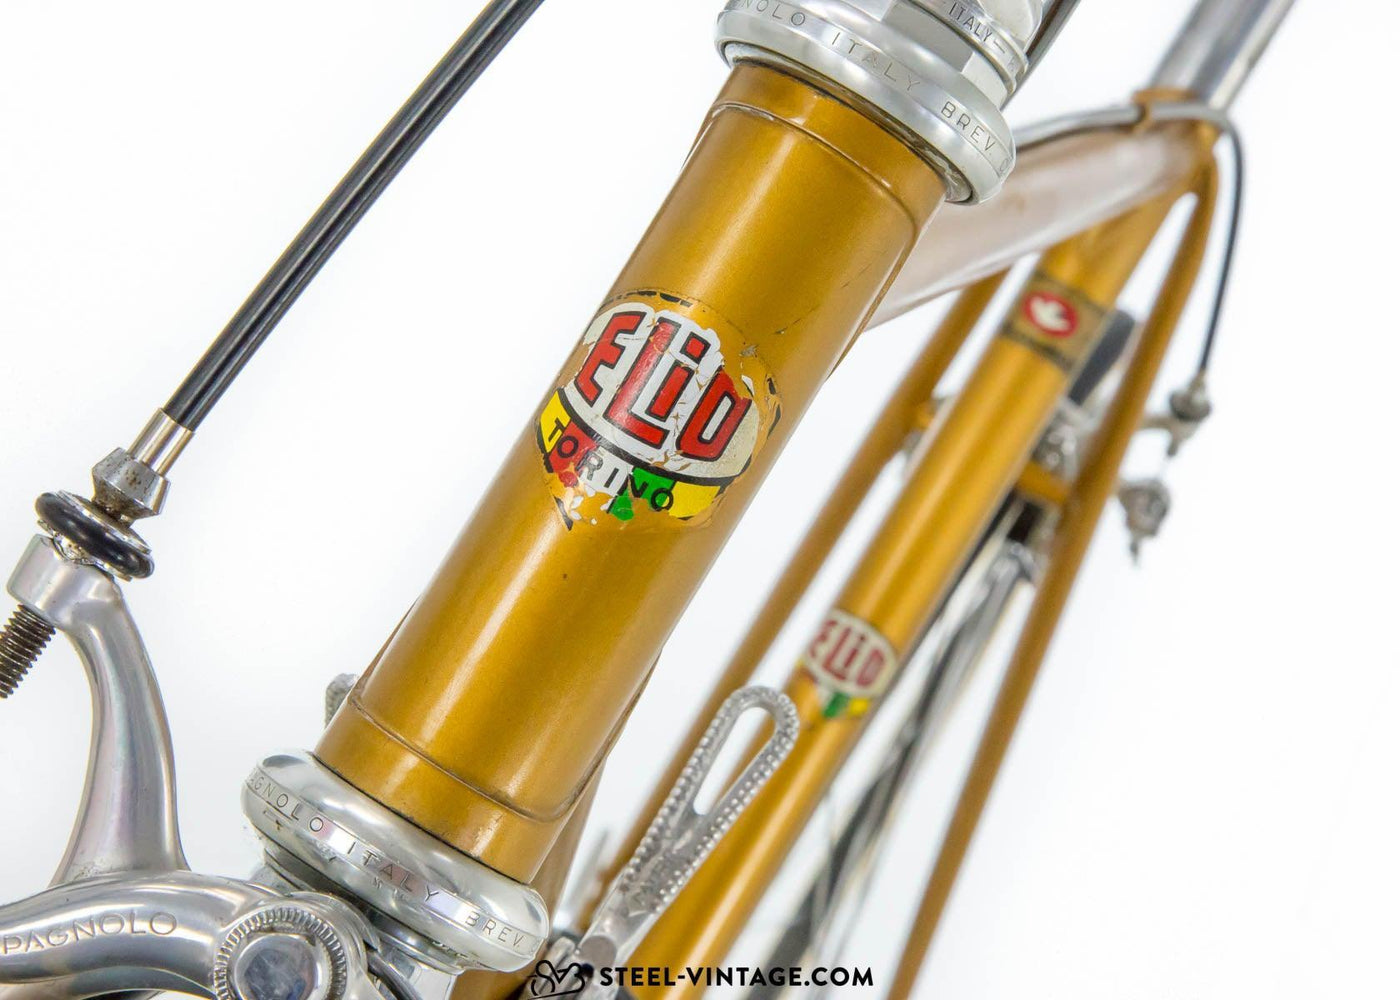 Elio Special Classic Road Bike 1979 | Steel Vintage Bikes